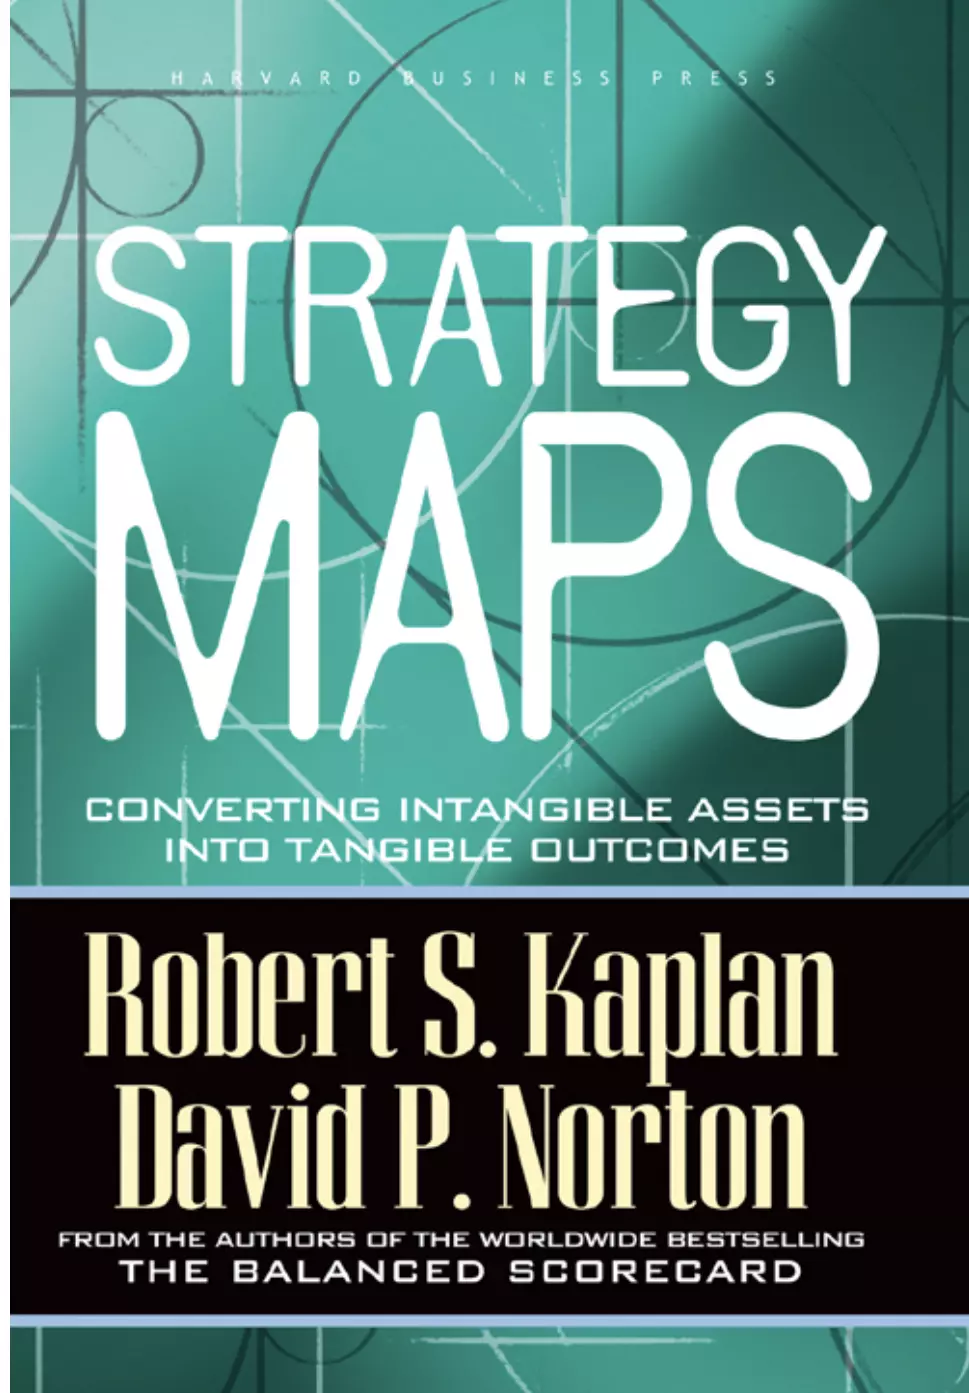 By Robert S. Kaplan and David P. Norton, "Strategy Maps